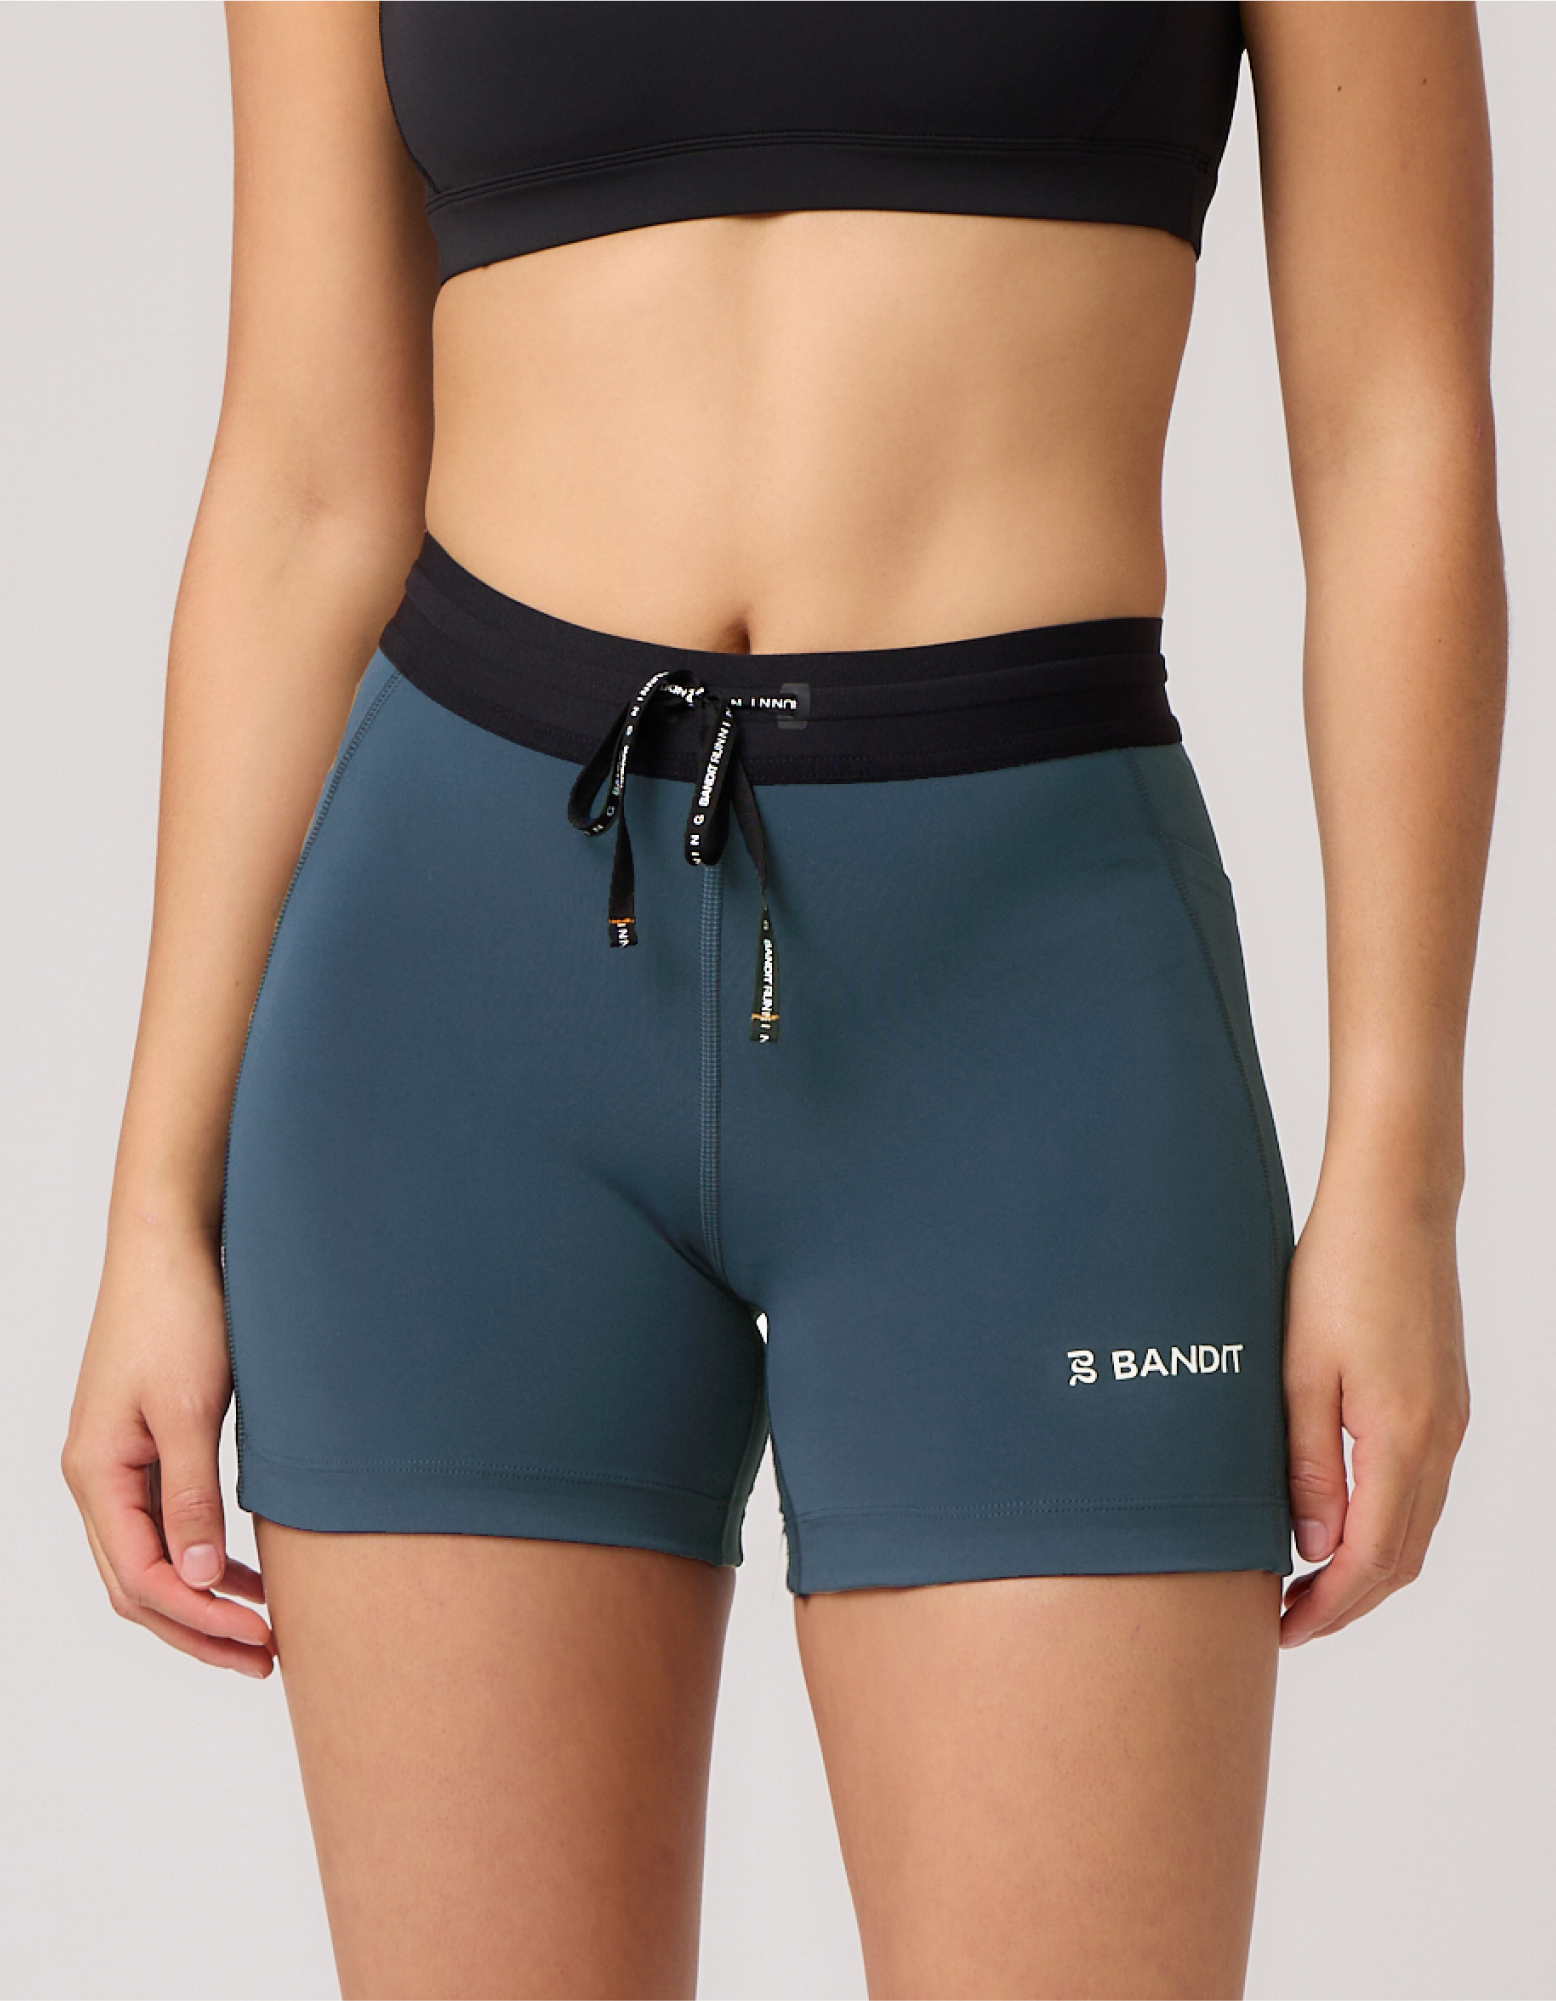 Bandit Stamina 5 Compression Shorts - Women's